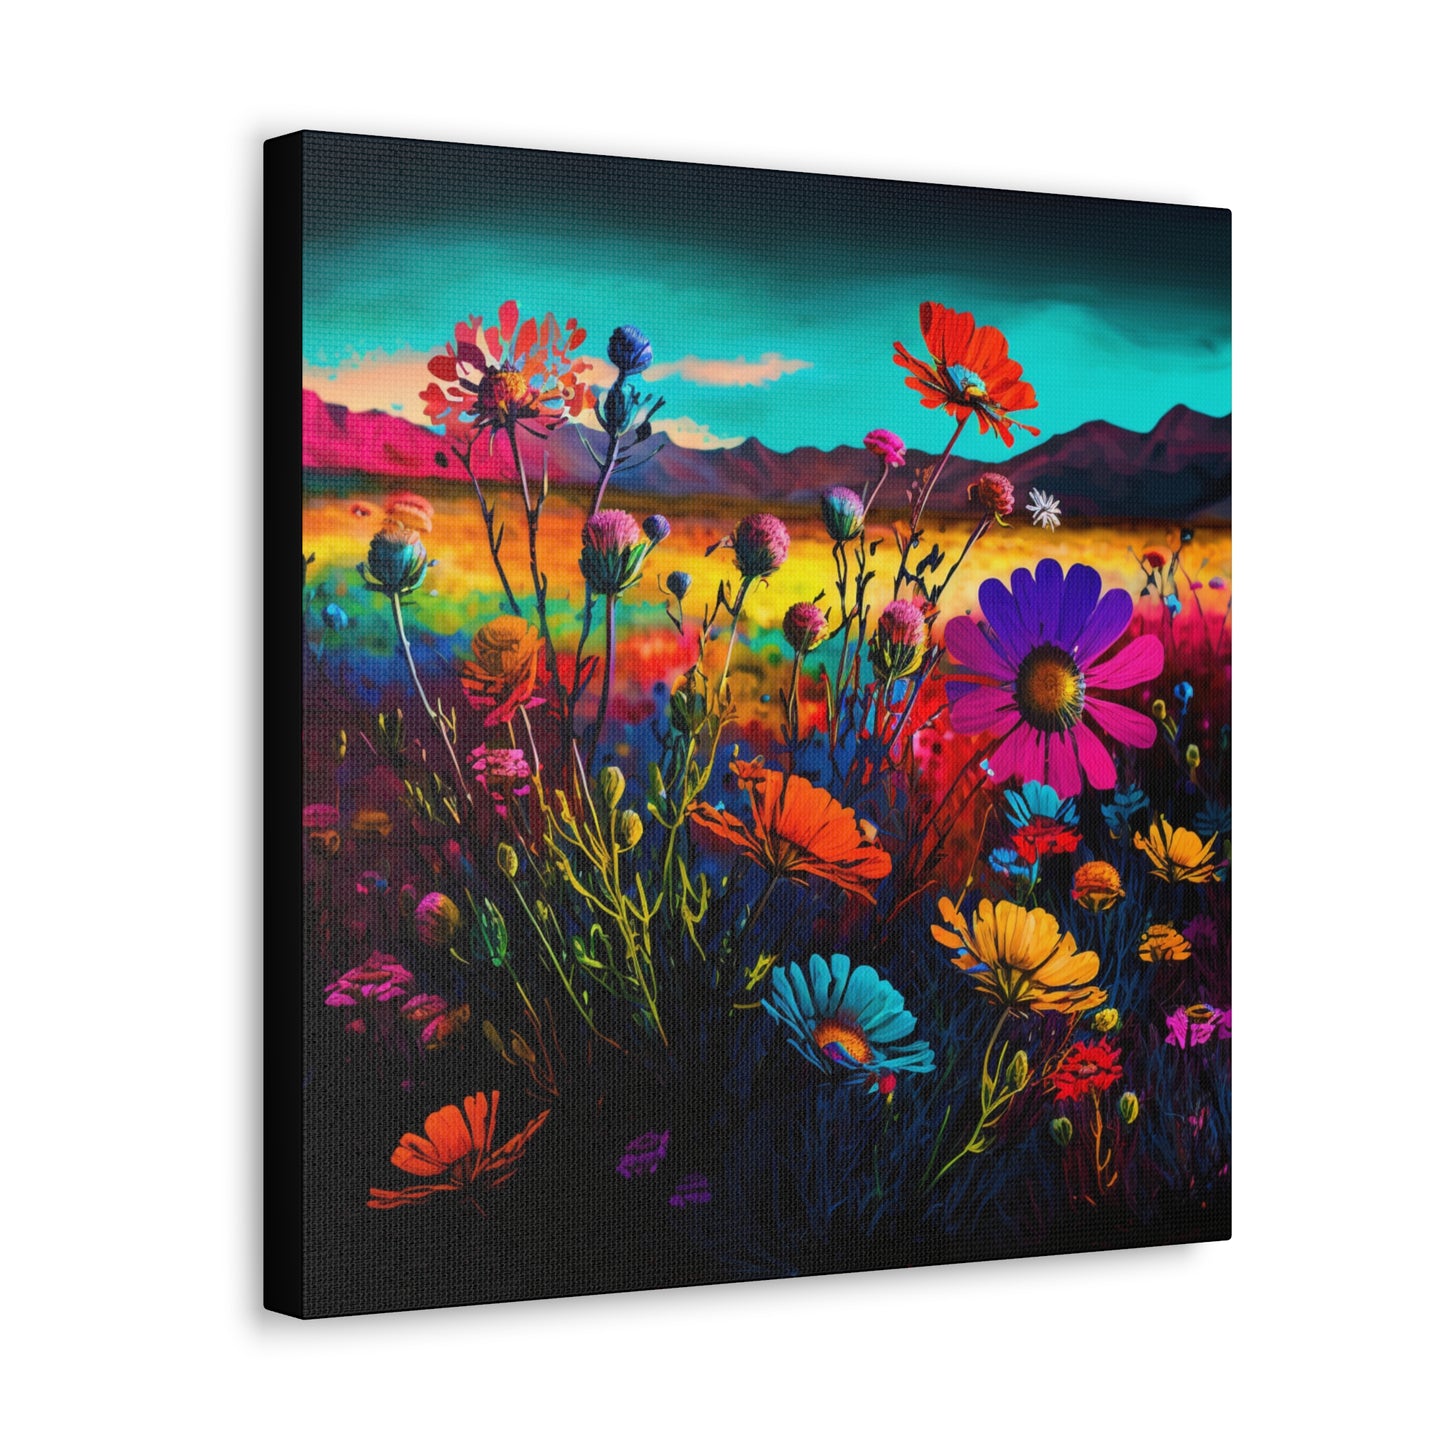 Wildflowers 2, Black Canvas Gallery Wraps